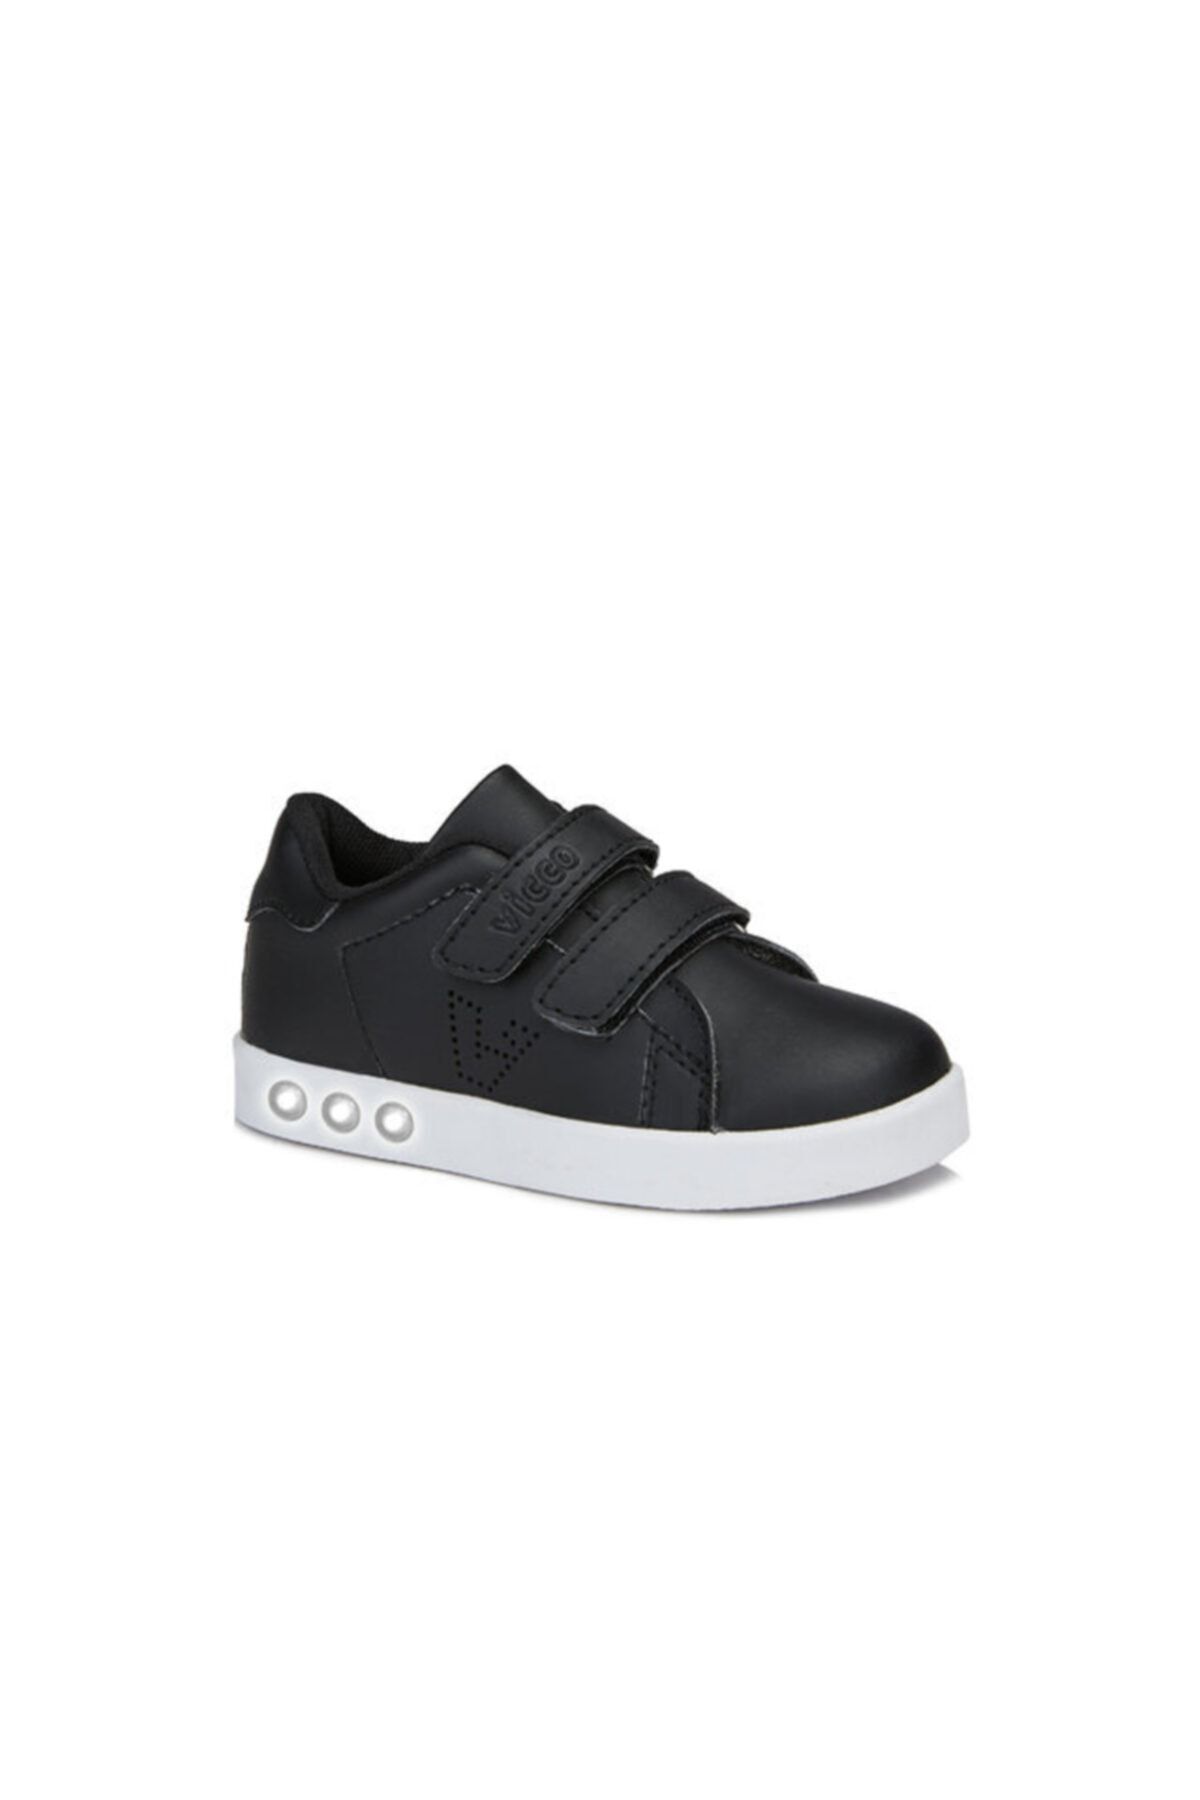 Vicco Unisex Çocuk Siyah Bantlı Sneaker 313.p19k.100